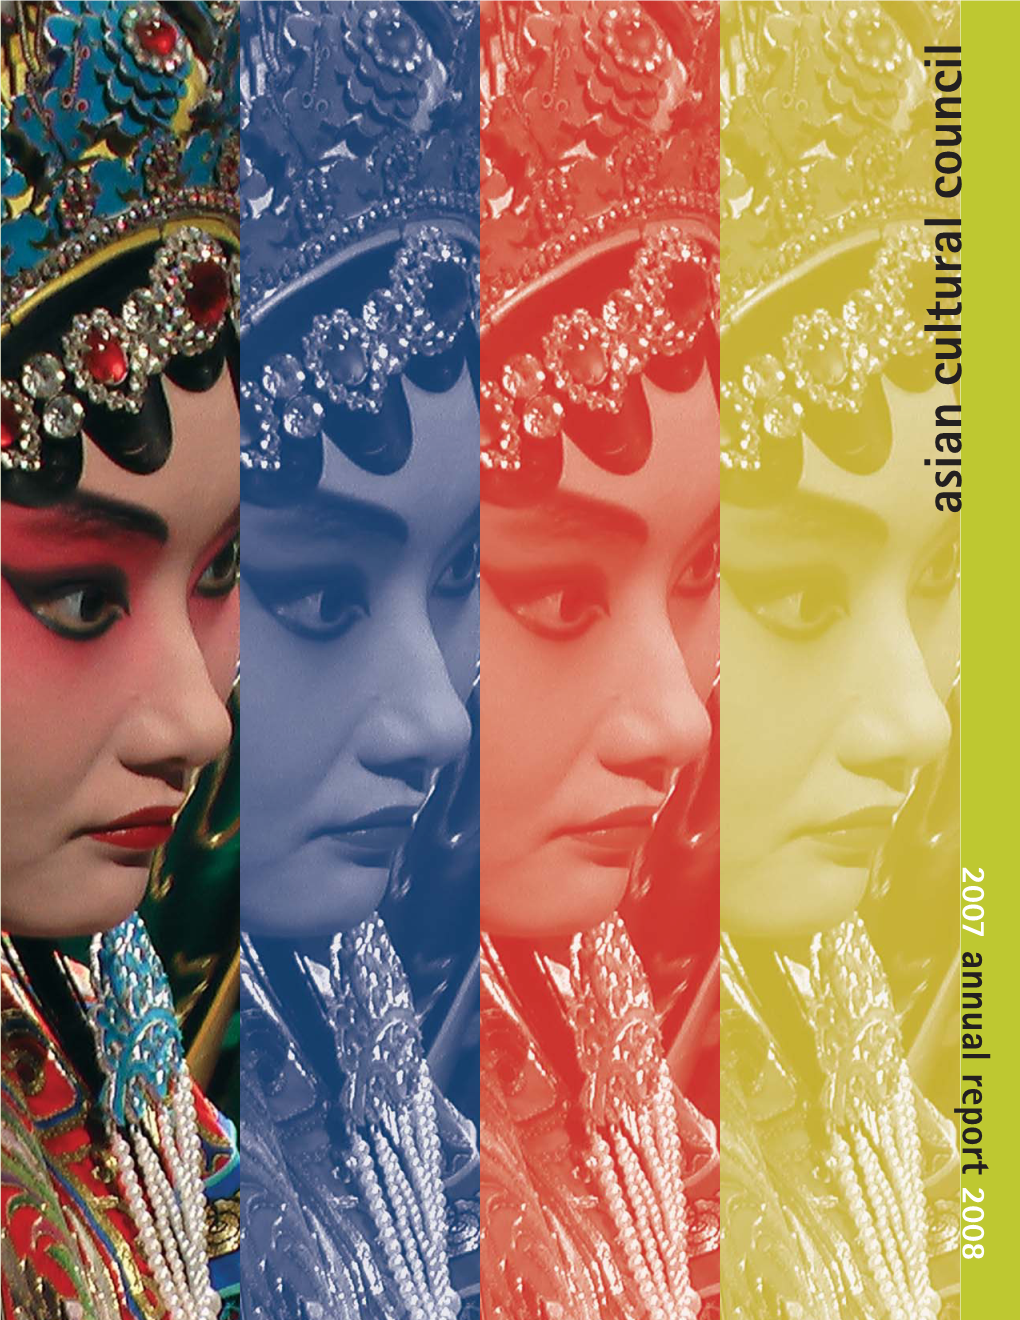 2007 Annual Report 2008 Asian Cultural